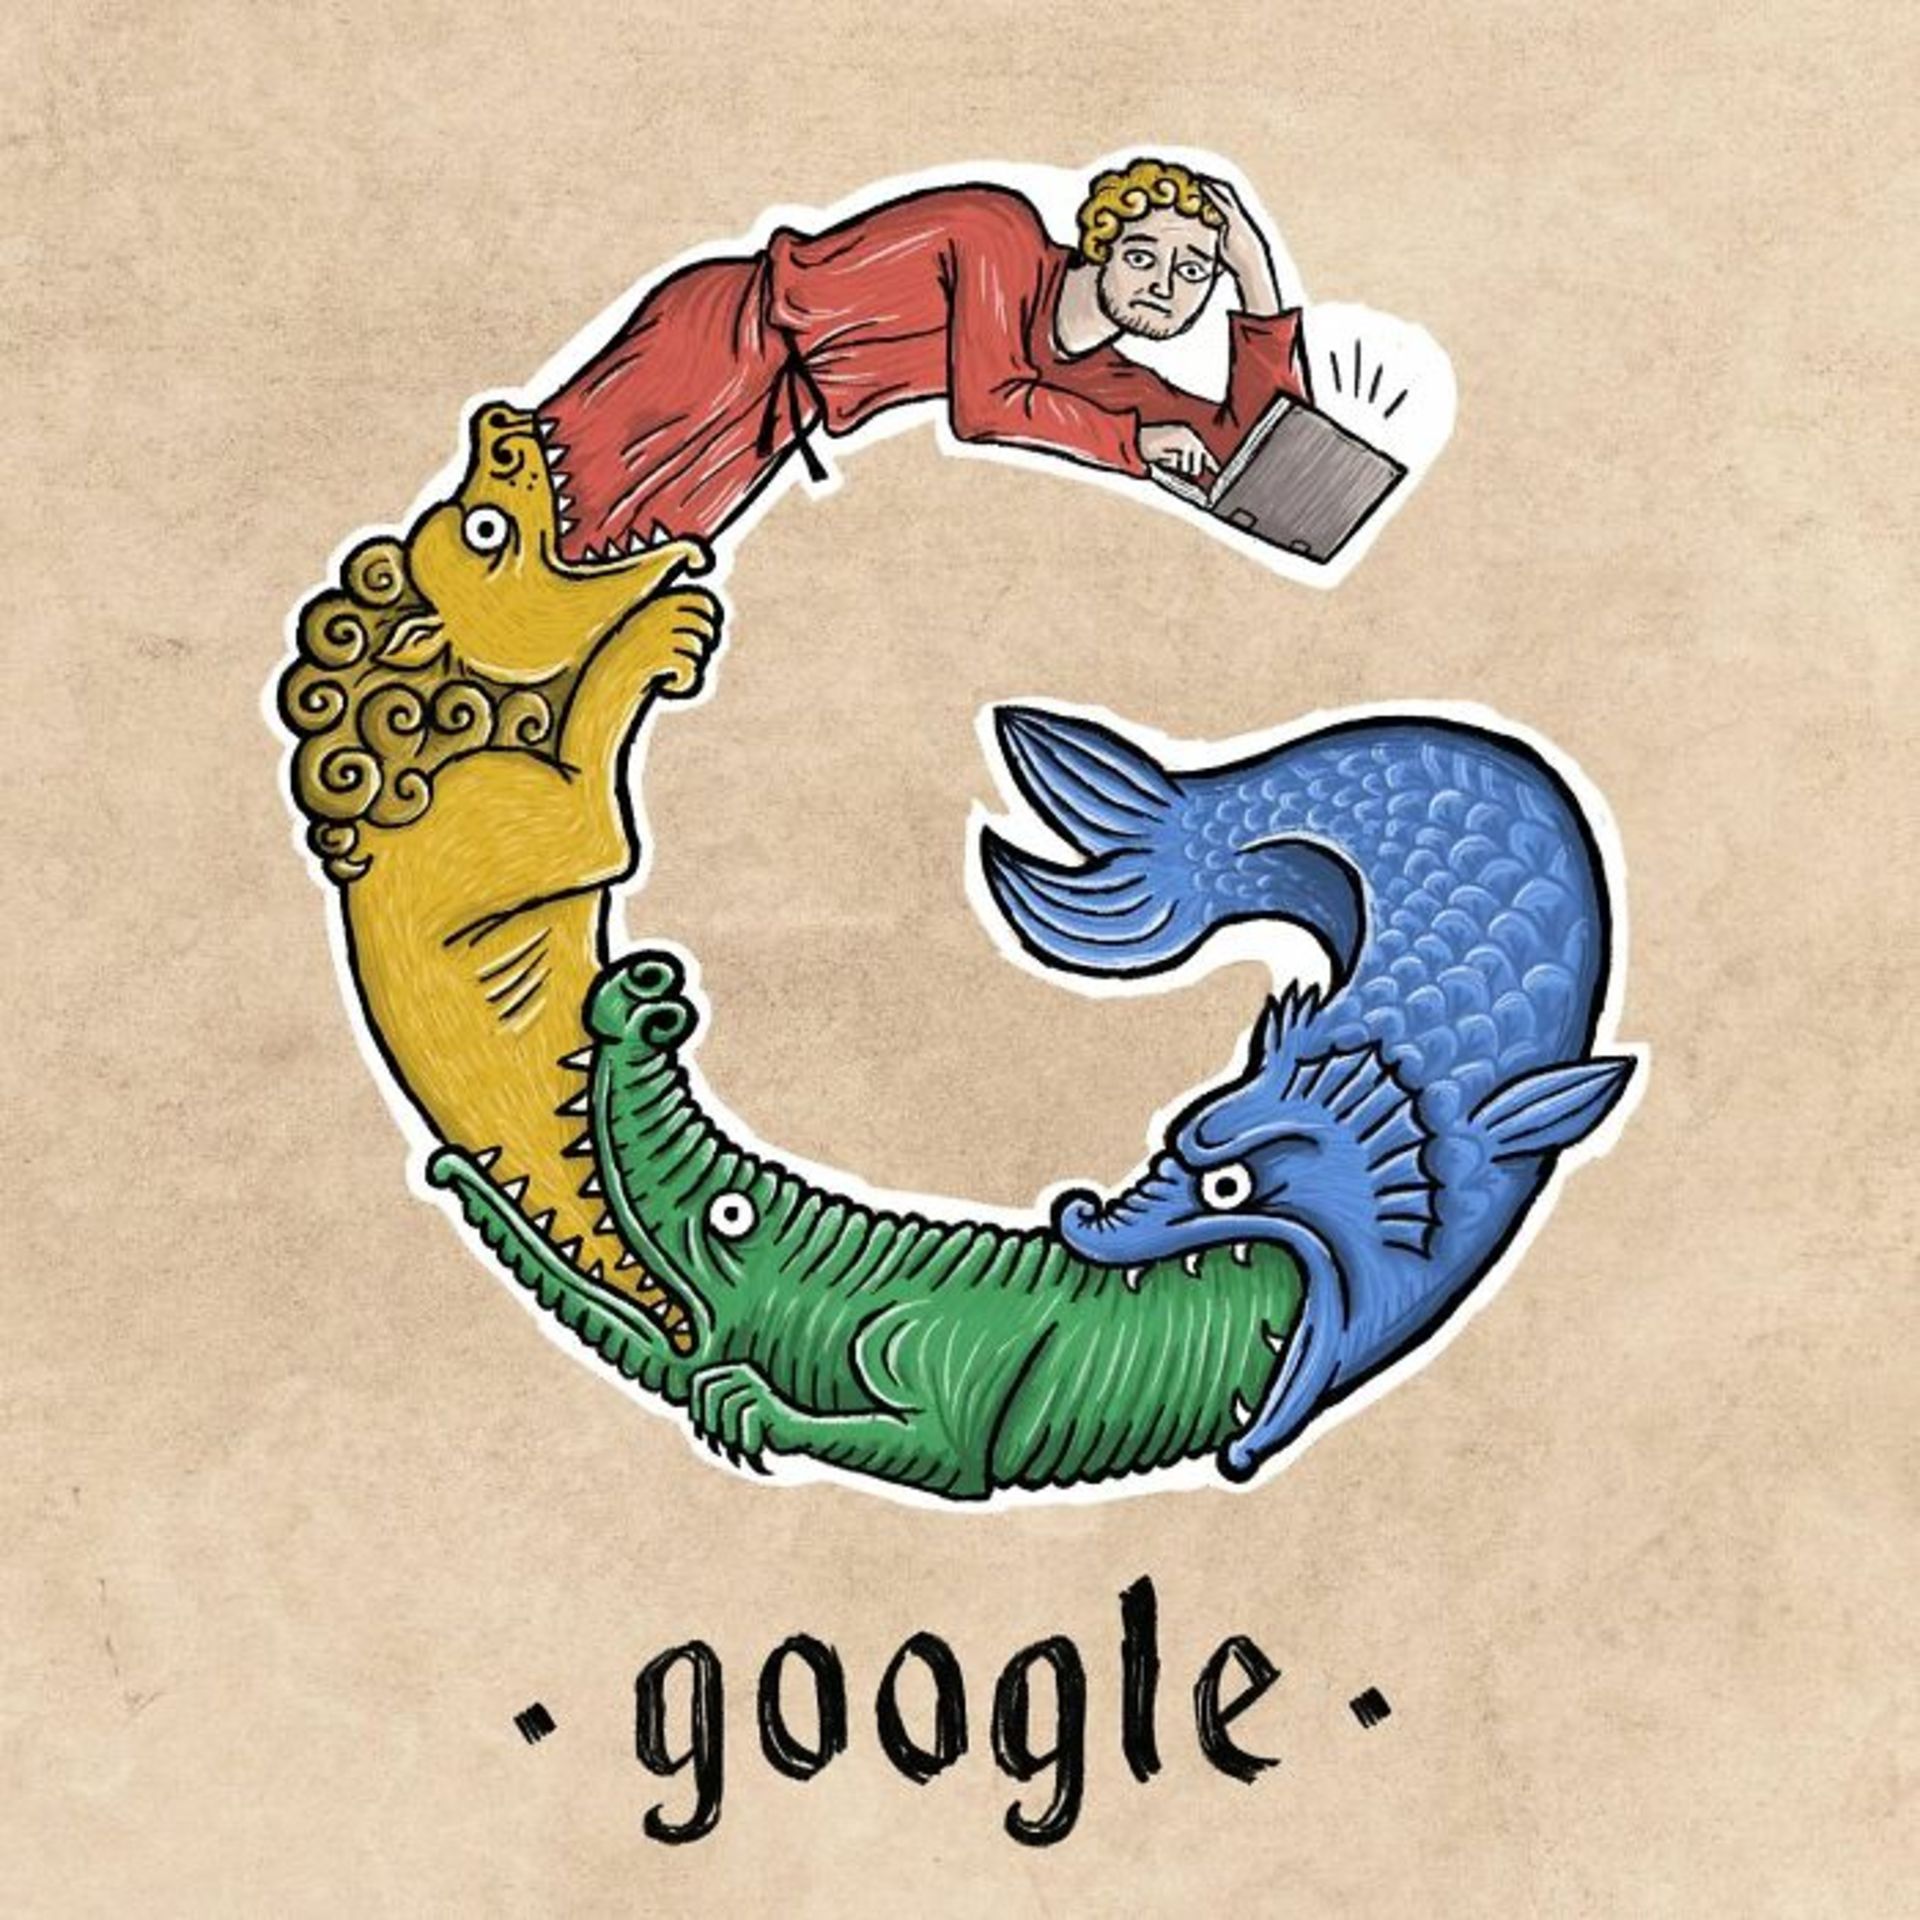 لوگوی گوگل به سبک قرون وسطی